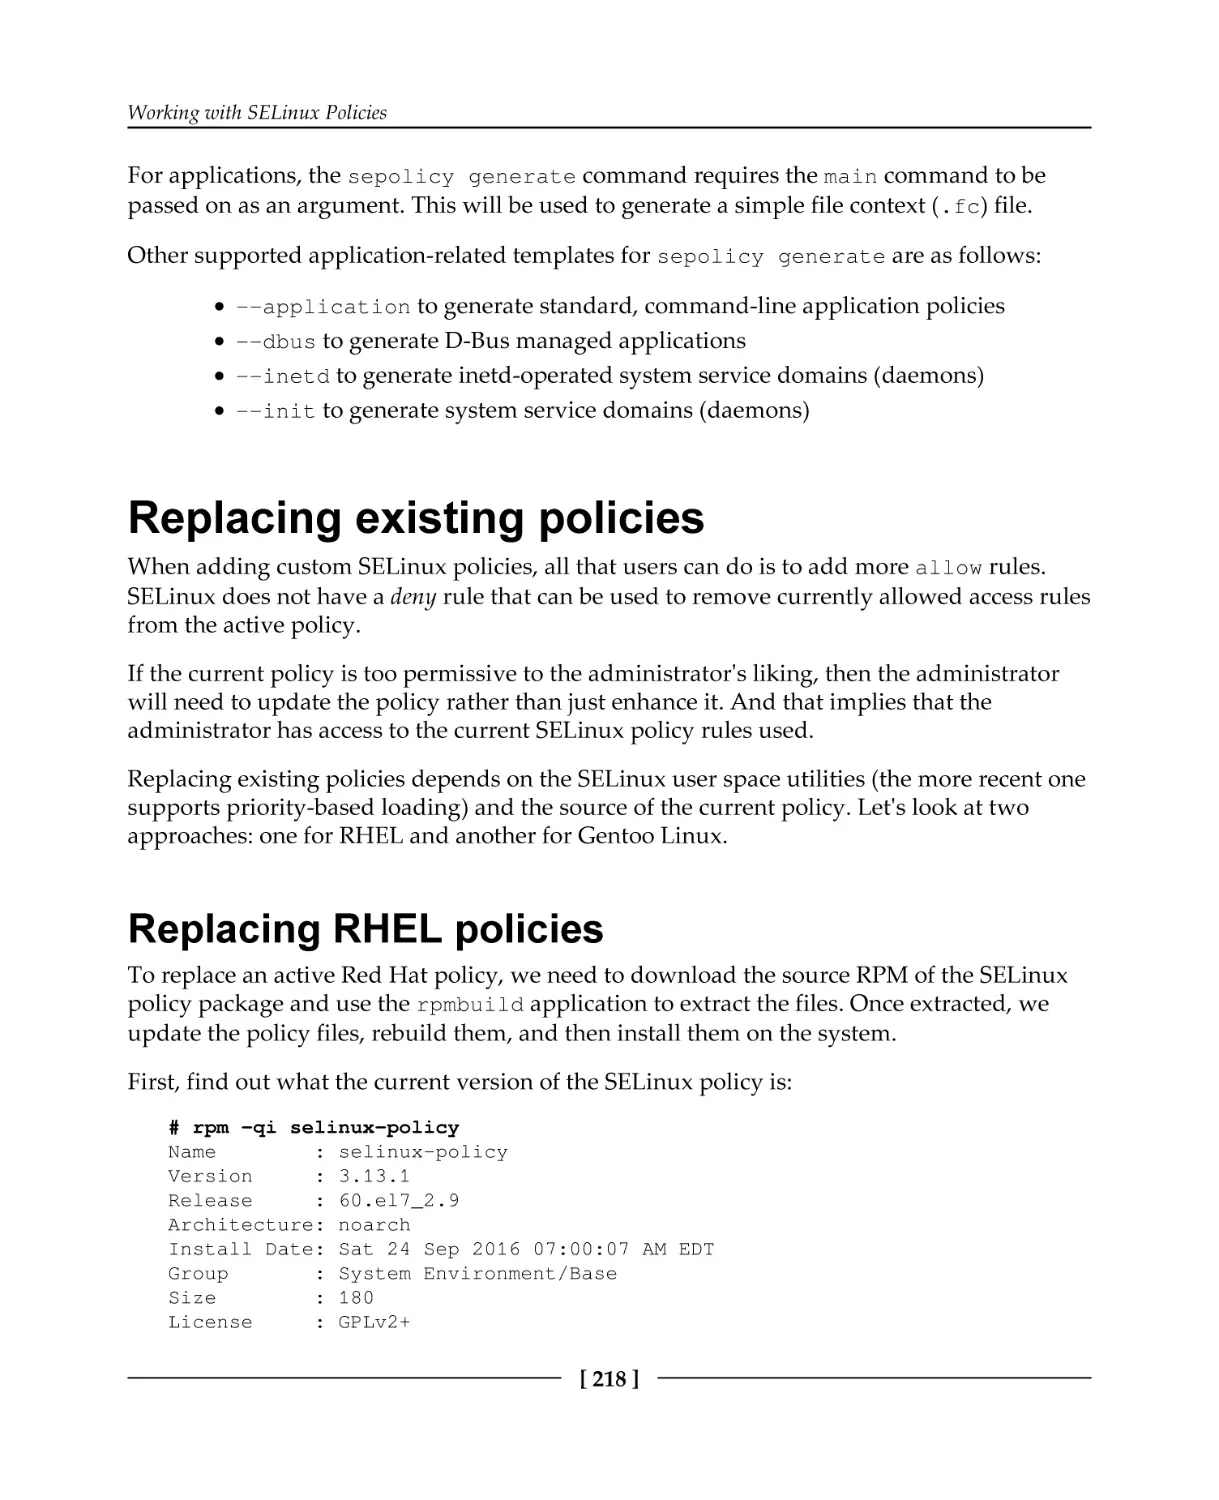 Replacing existing policies
Replacing RHEL policies